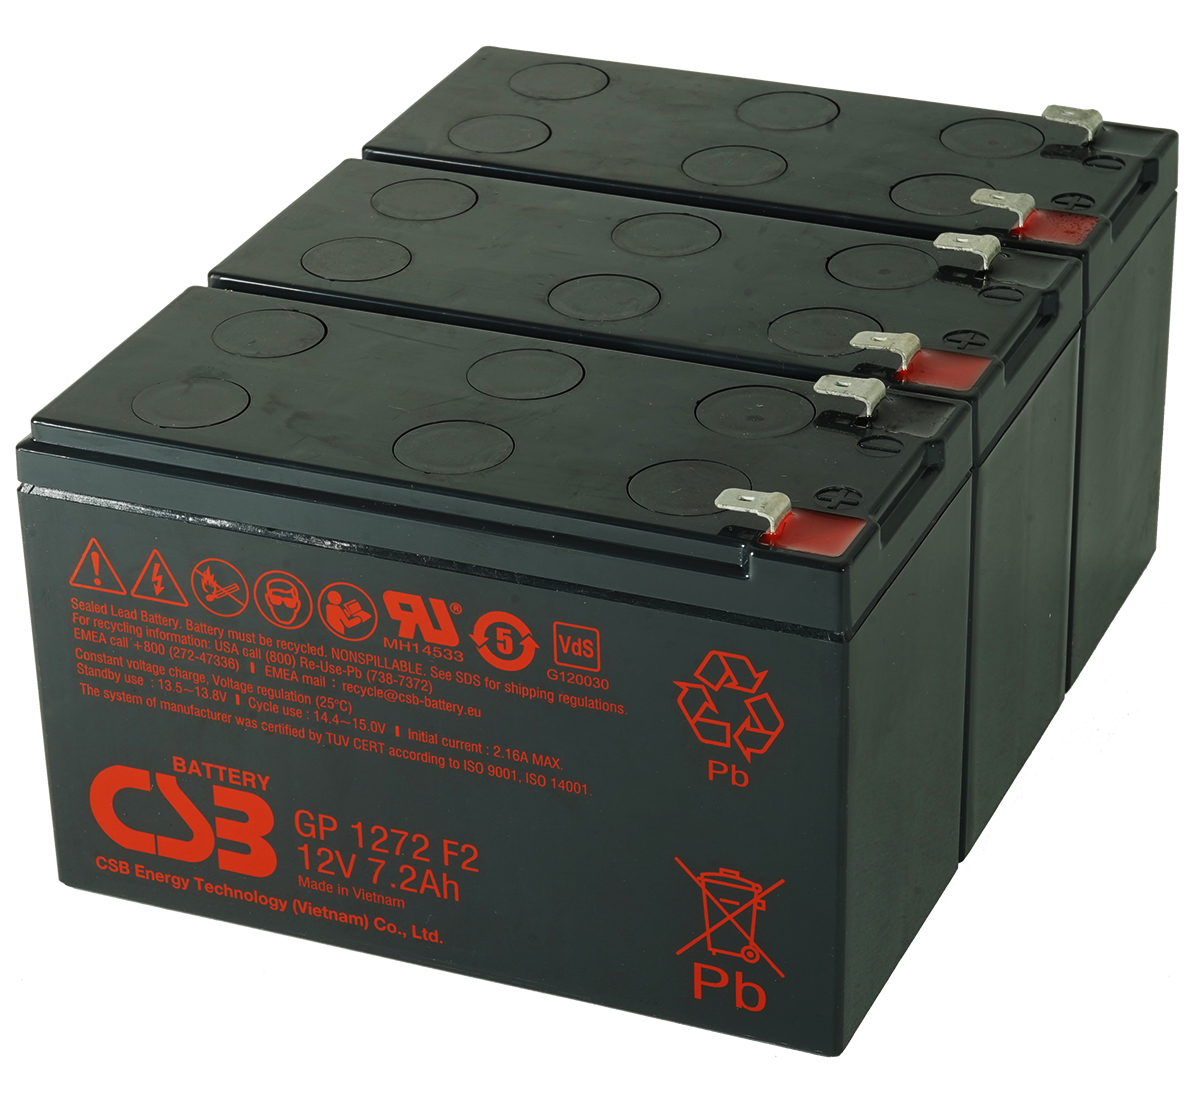 MDS53 UPS Battery Kit - Replaces APC RBC53